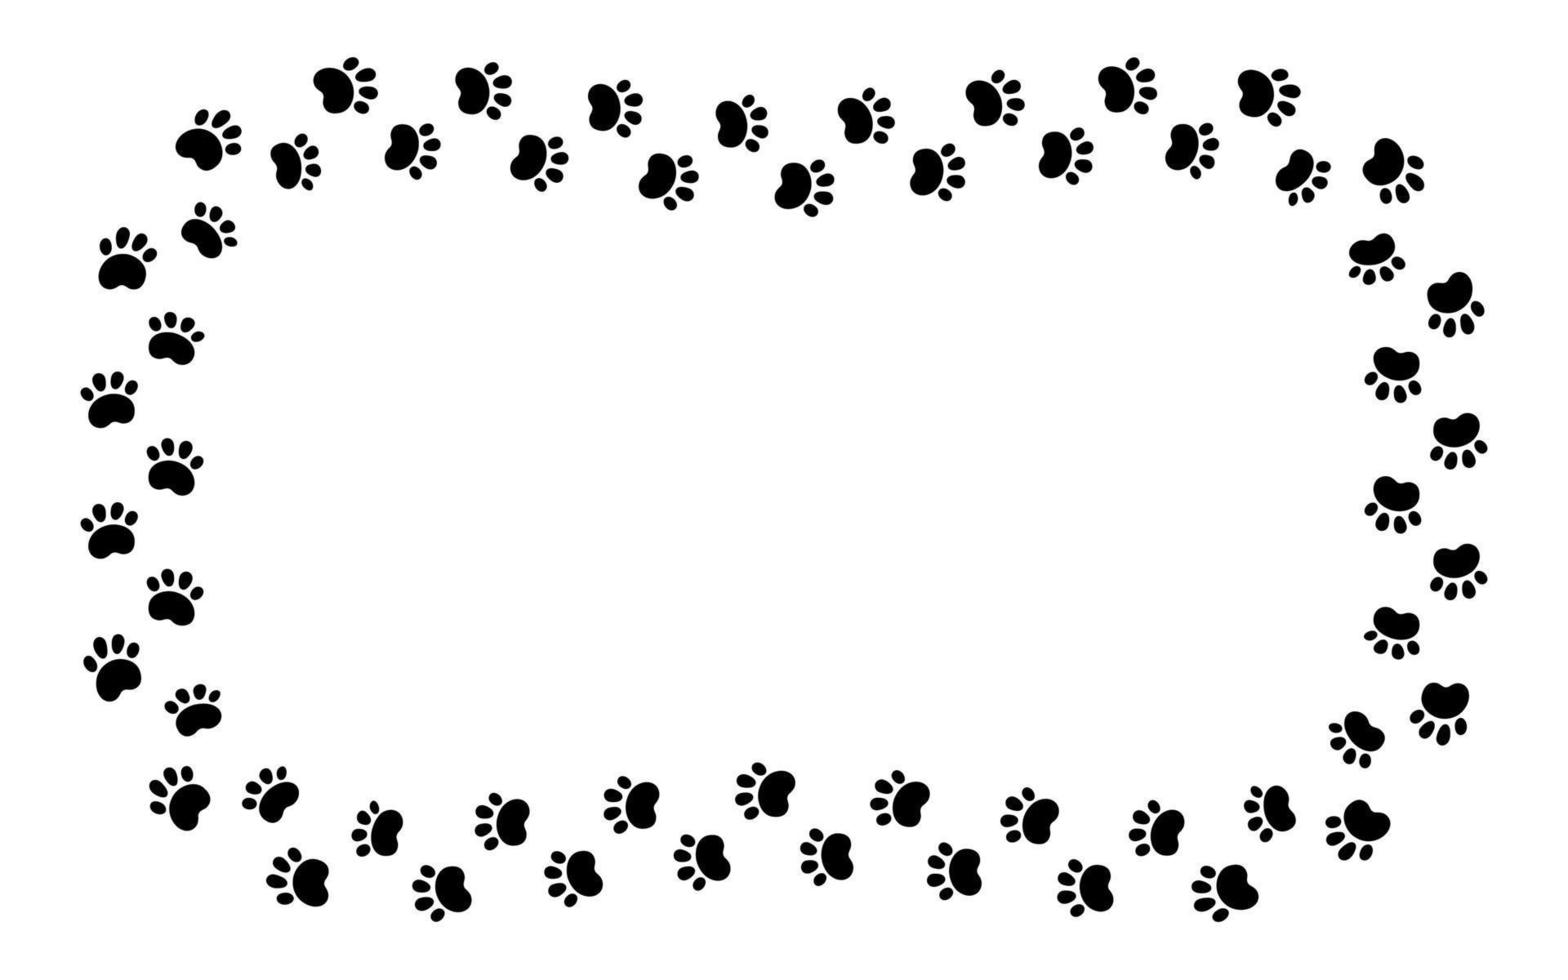 perro pata impresión rectángulo marco. linda gato huella marco. mascota pie sendero borde. negro perro paso silueta. sencillo garabatear dibujo. vector ilustración aislado en blanco antecedentes